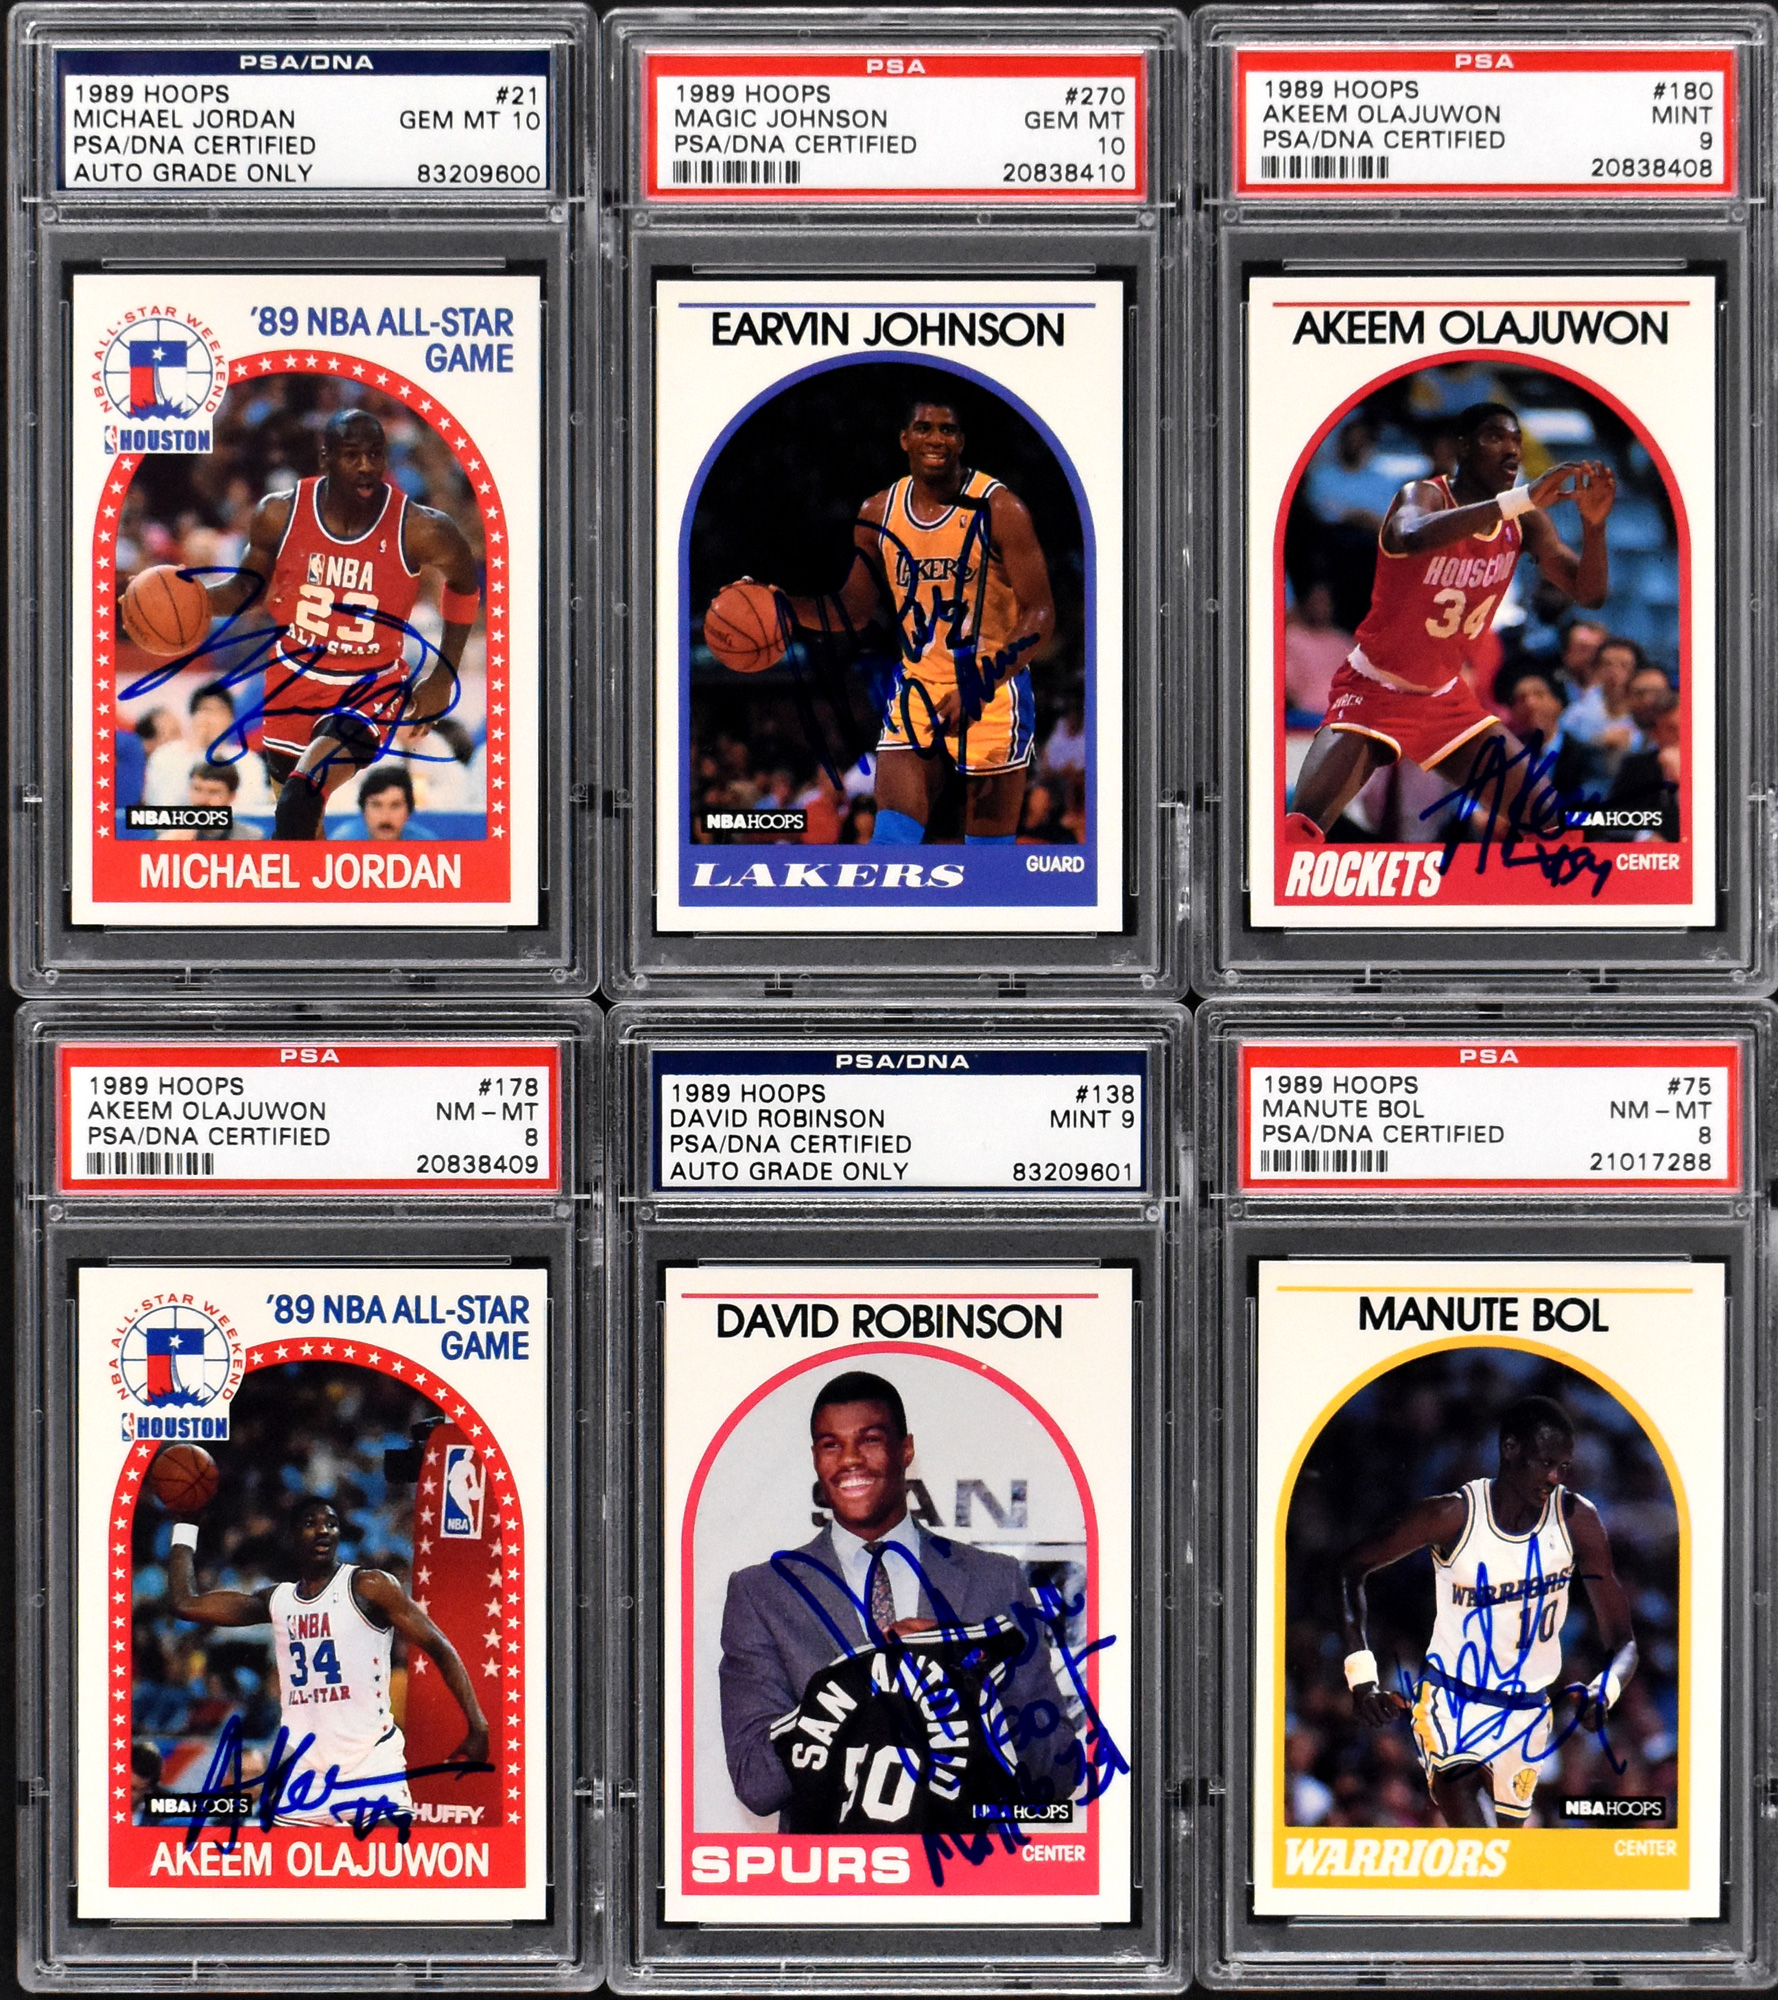 Michael Jordan 1995 Hoops Basketball Card #21 Graded PSA 8